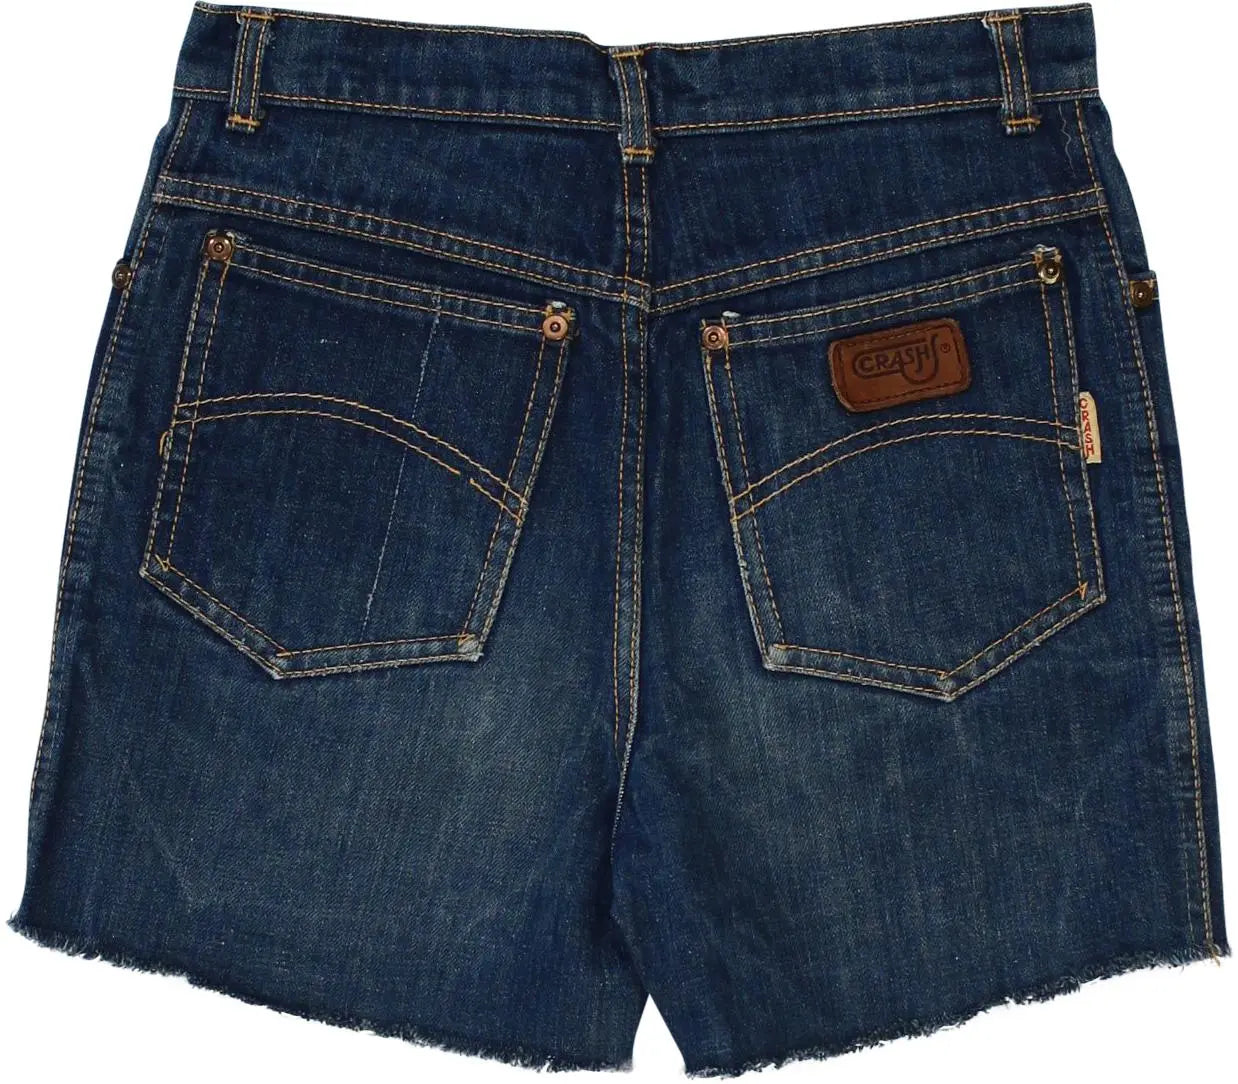 Crash - Blue Denim Shorts- ThriftTale.com - Vintage and second handclothing